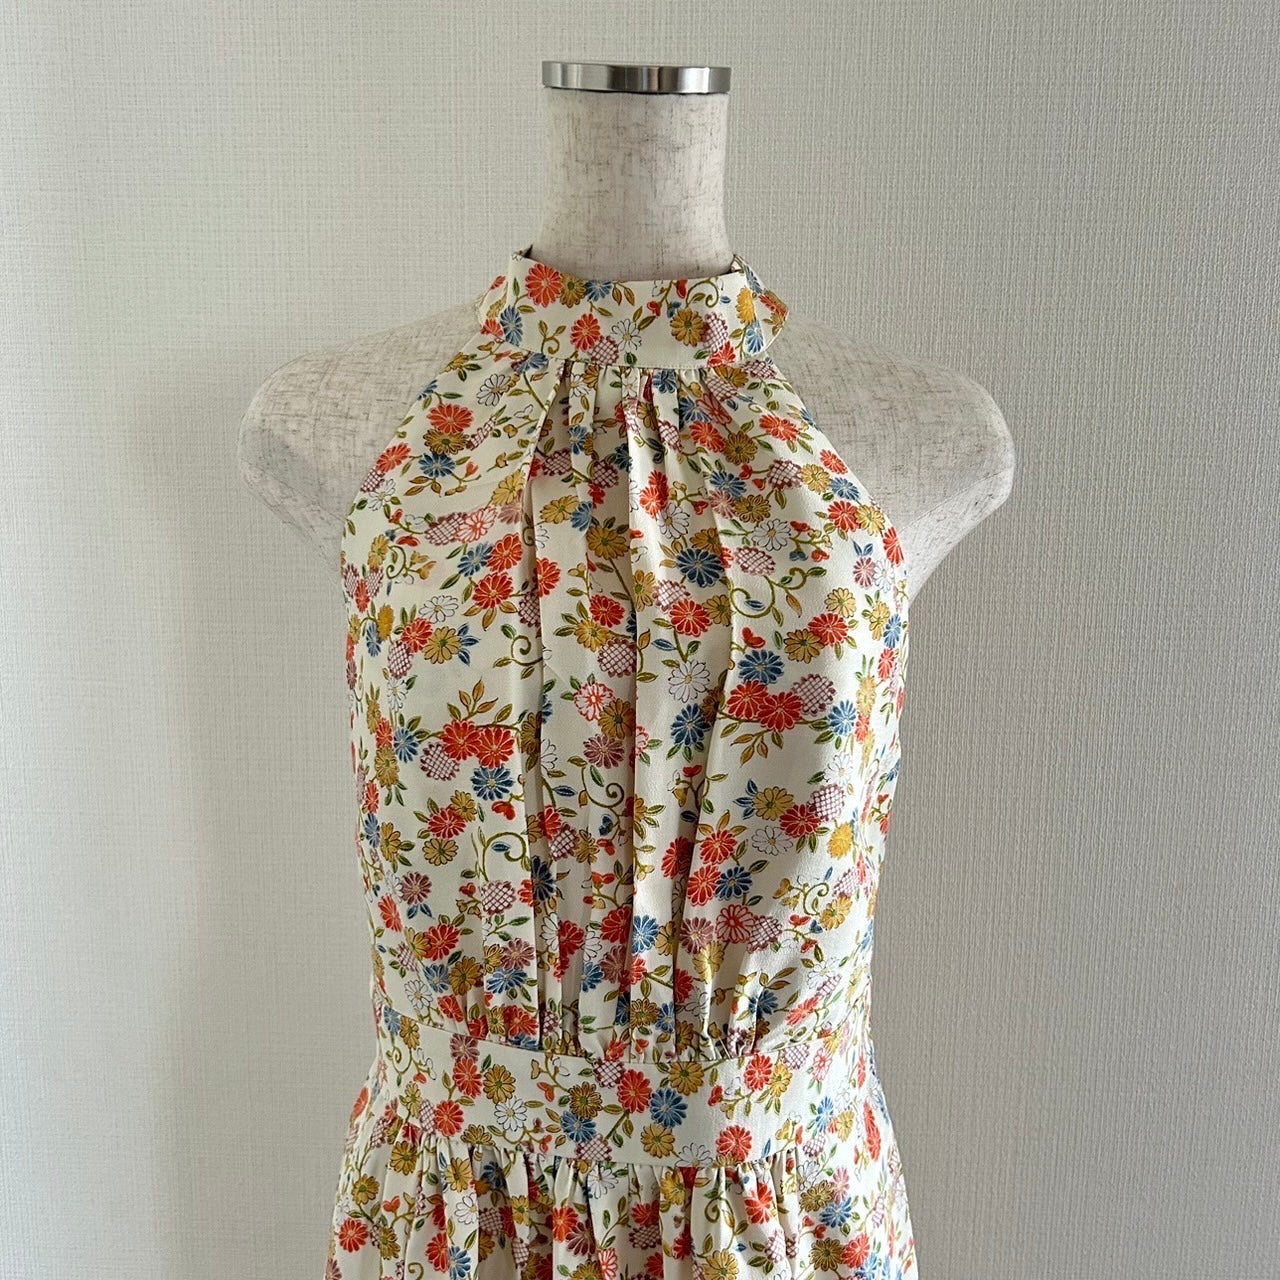 Silk Kimono dress, Komon 小紋,  hand crafted, Upcycled, #pre23